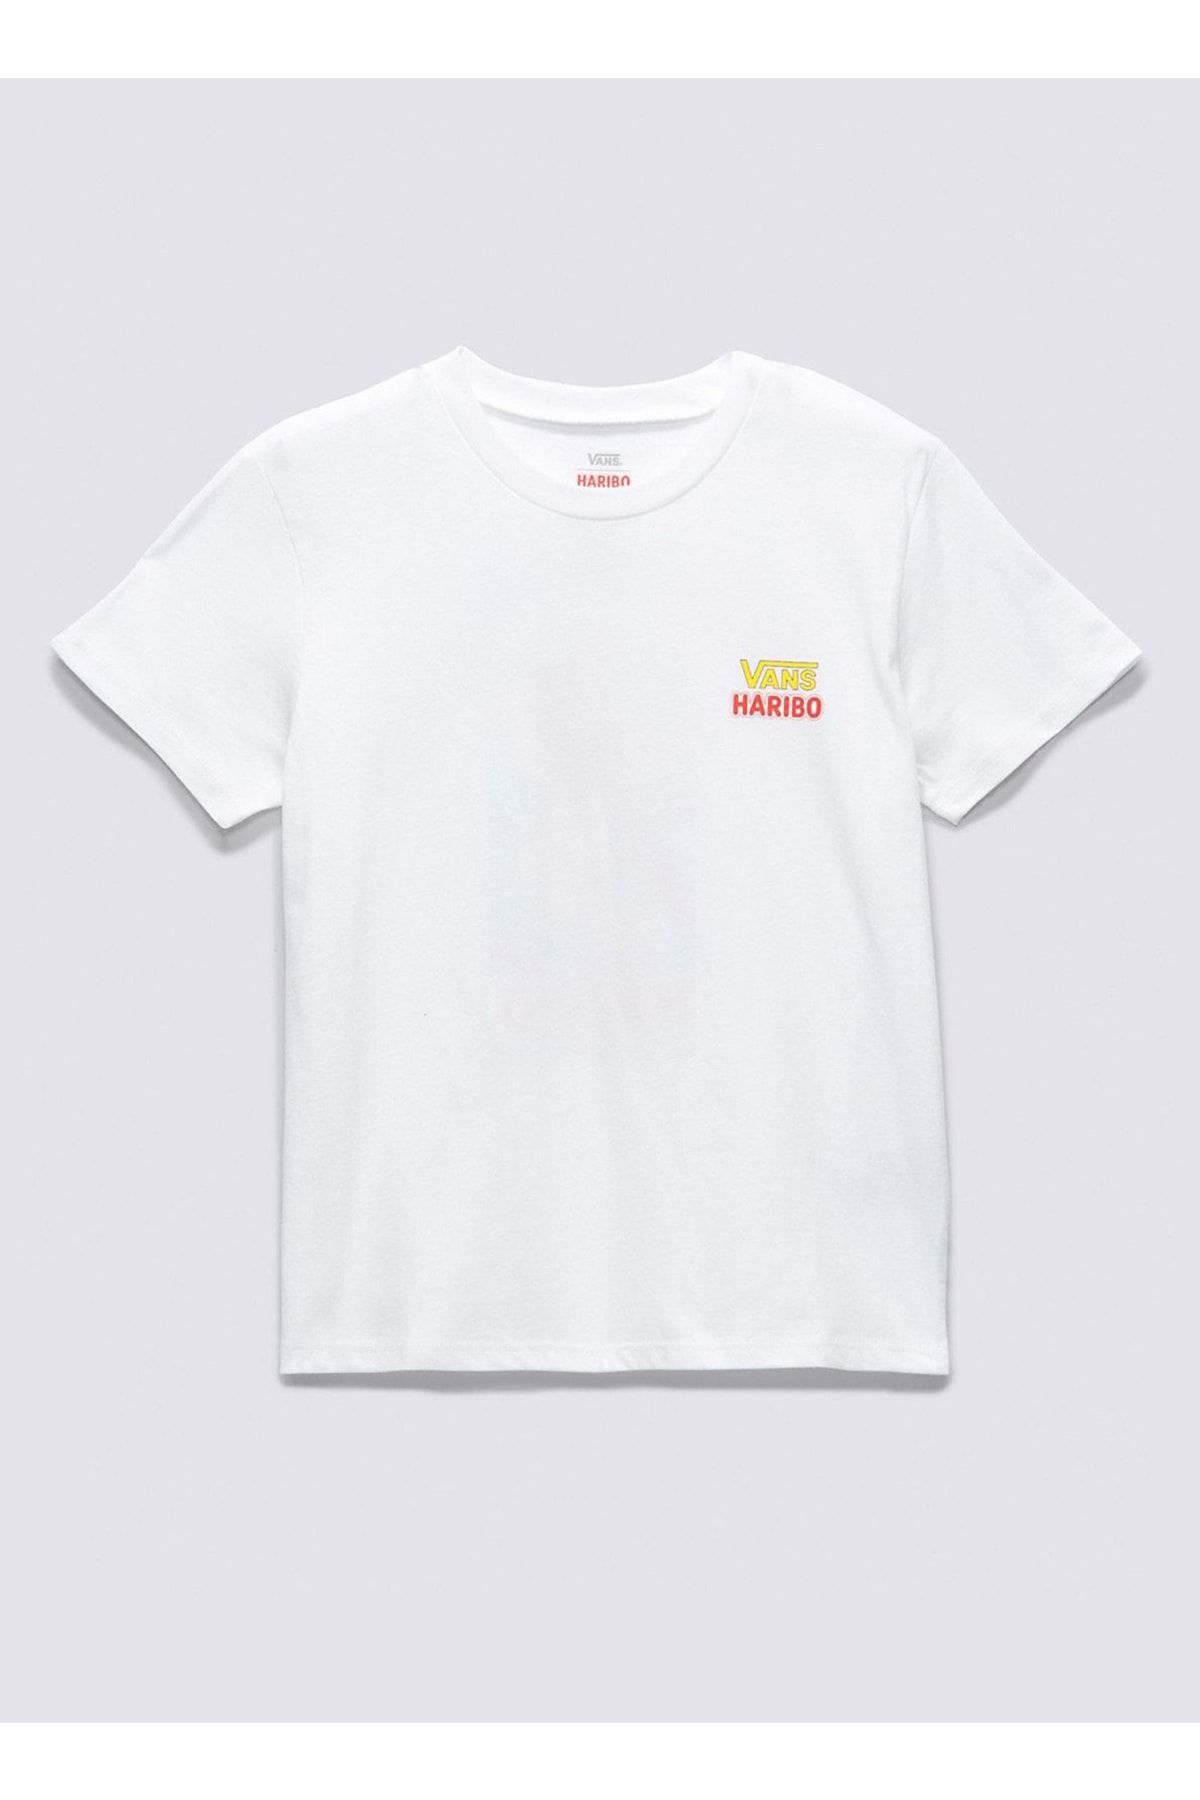 Vans Beyaz Erkek Çocuk T-Shirt VN000778WHT1 HARIBO SS CREW